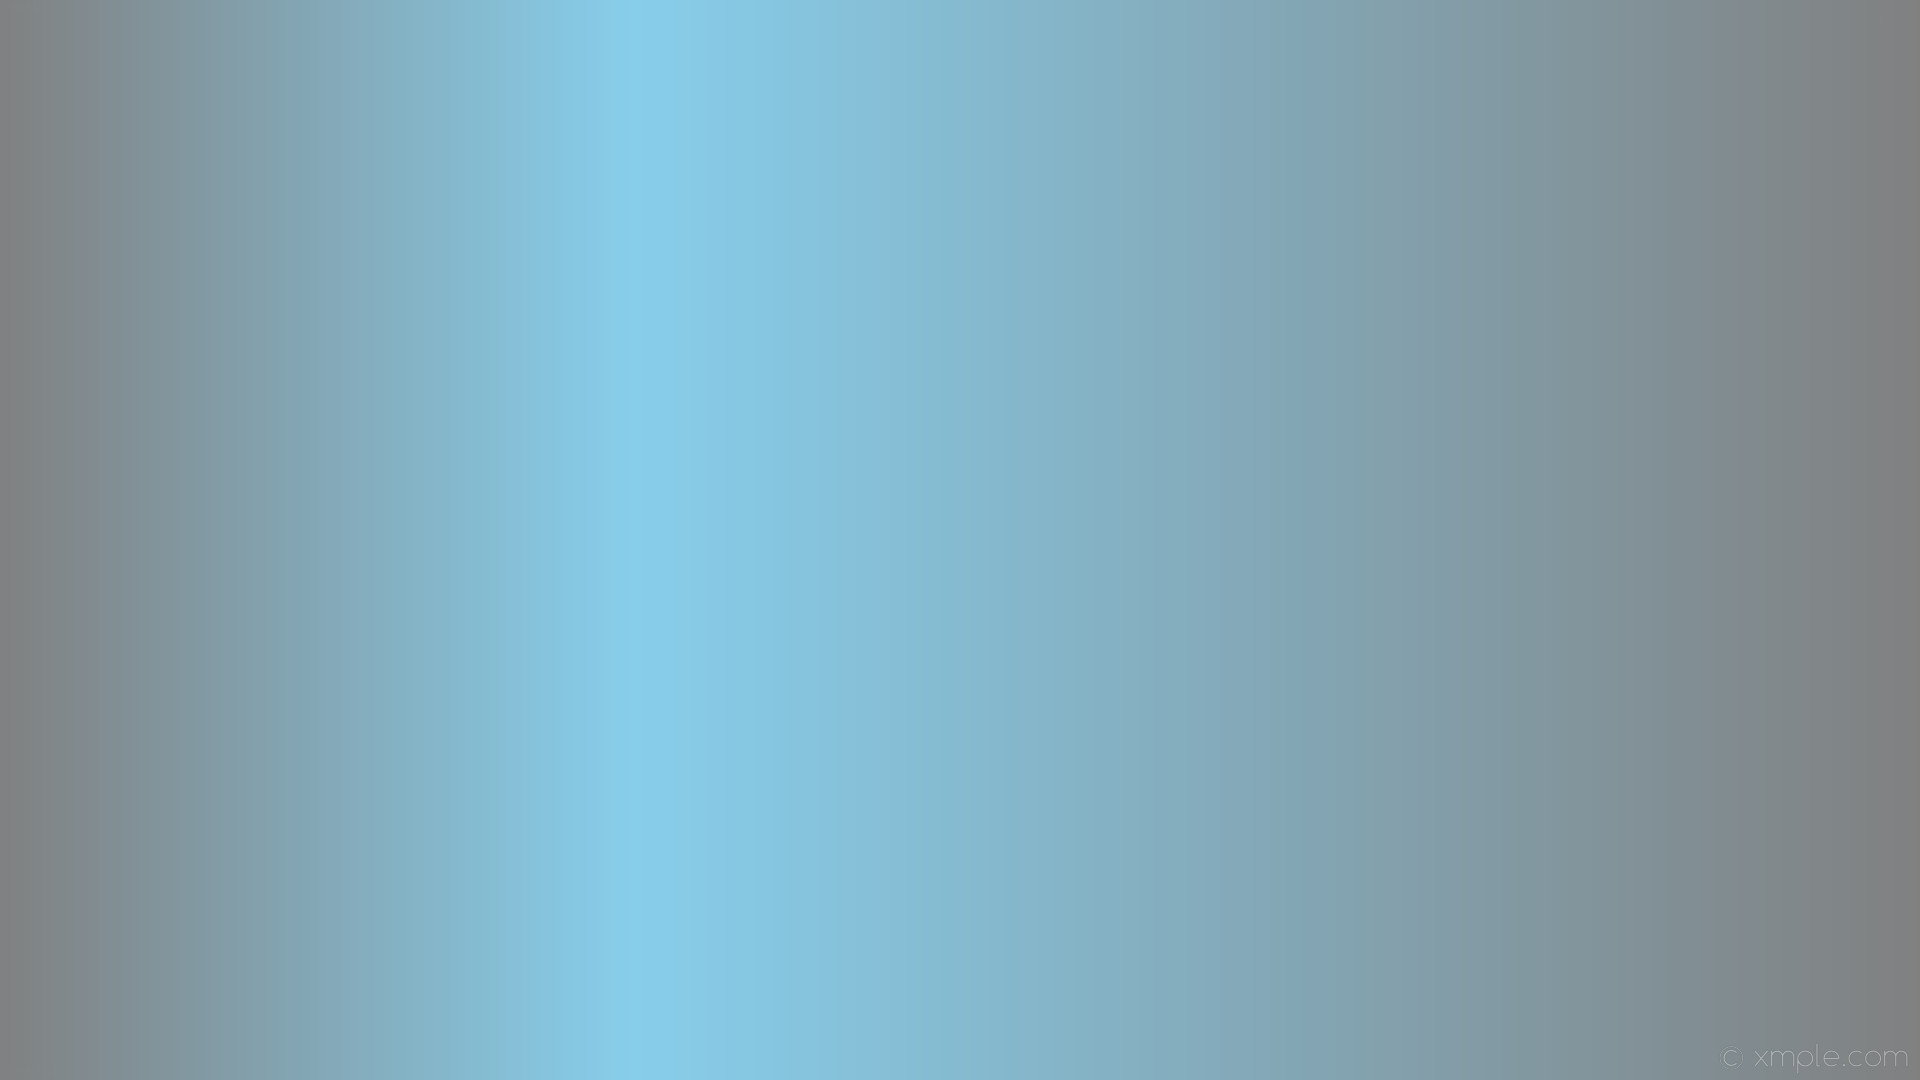 1920x1080 wallpaper linear highlight grey blue gradient gray sky blue #808080 #87ceeb  0Â° 67